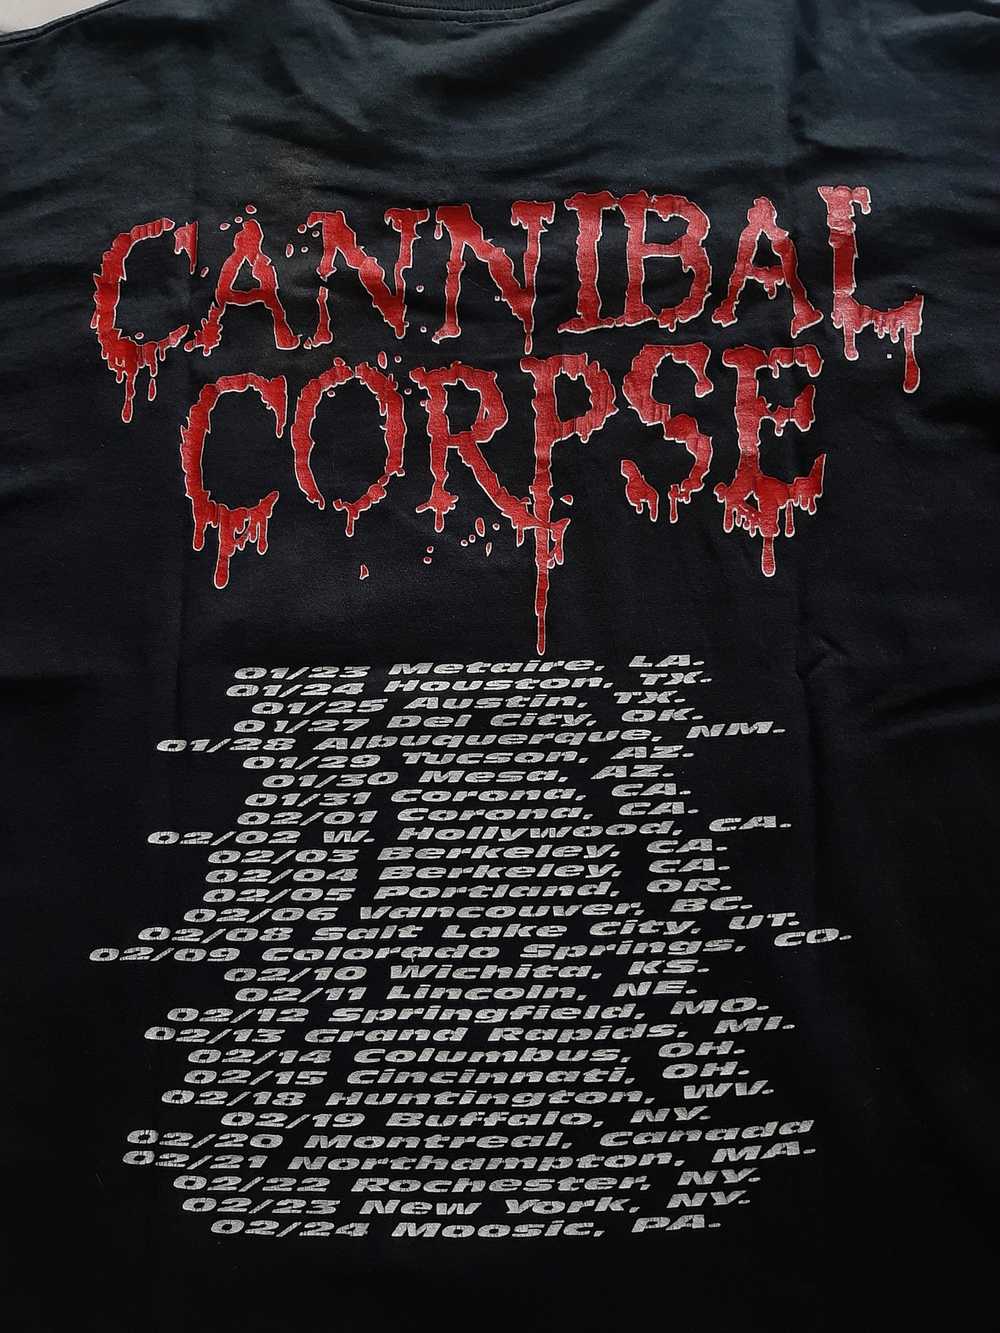 Band Tees Vintage Cannibal Corpse - image 2